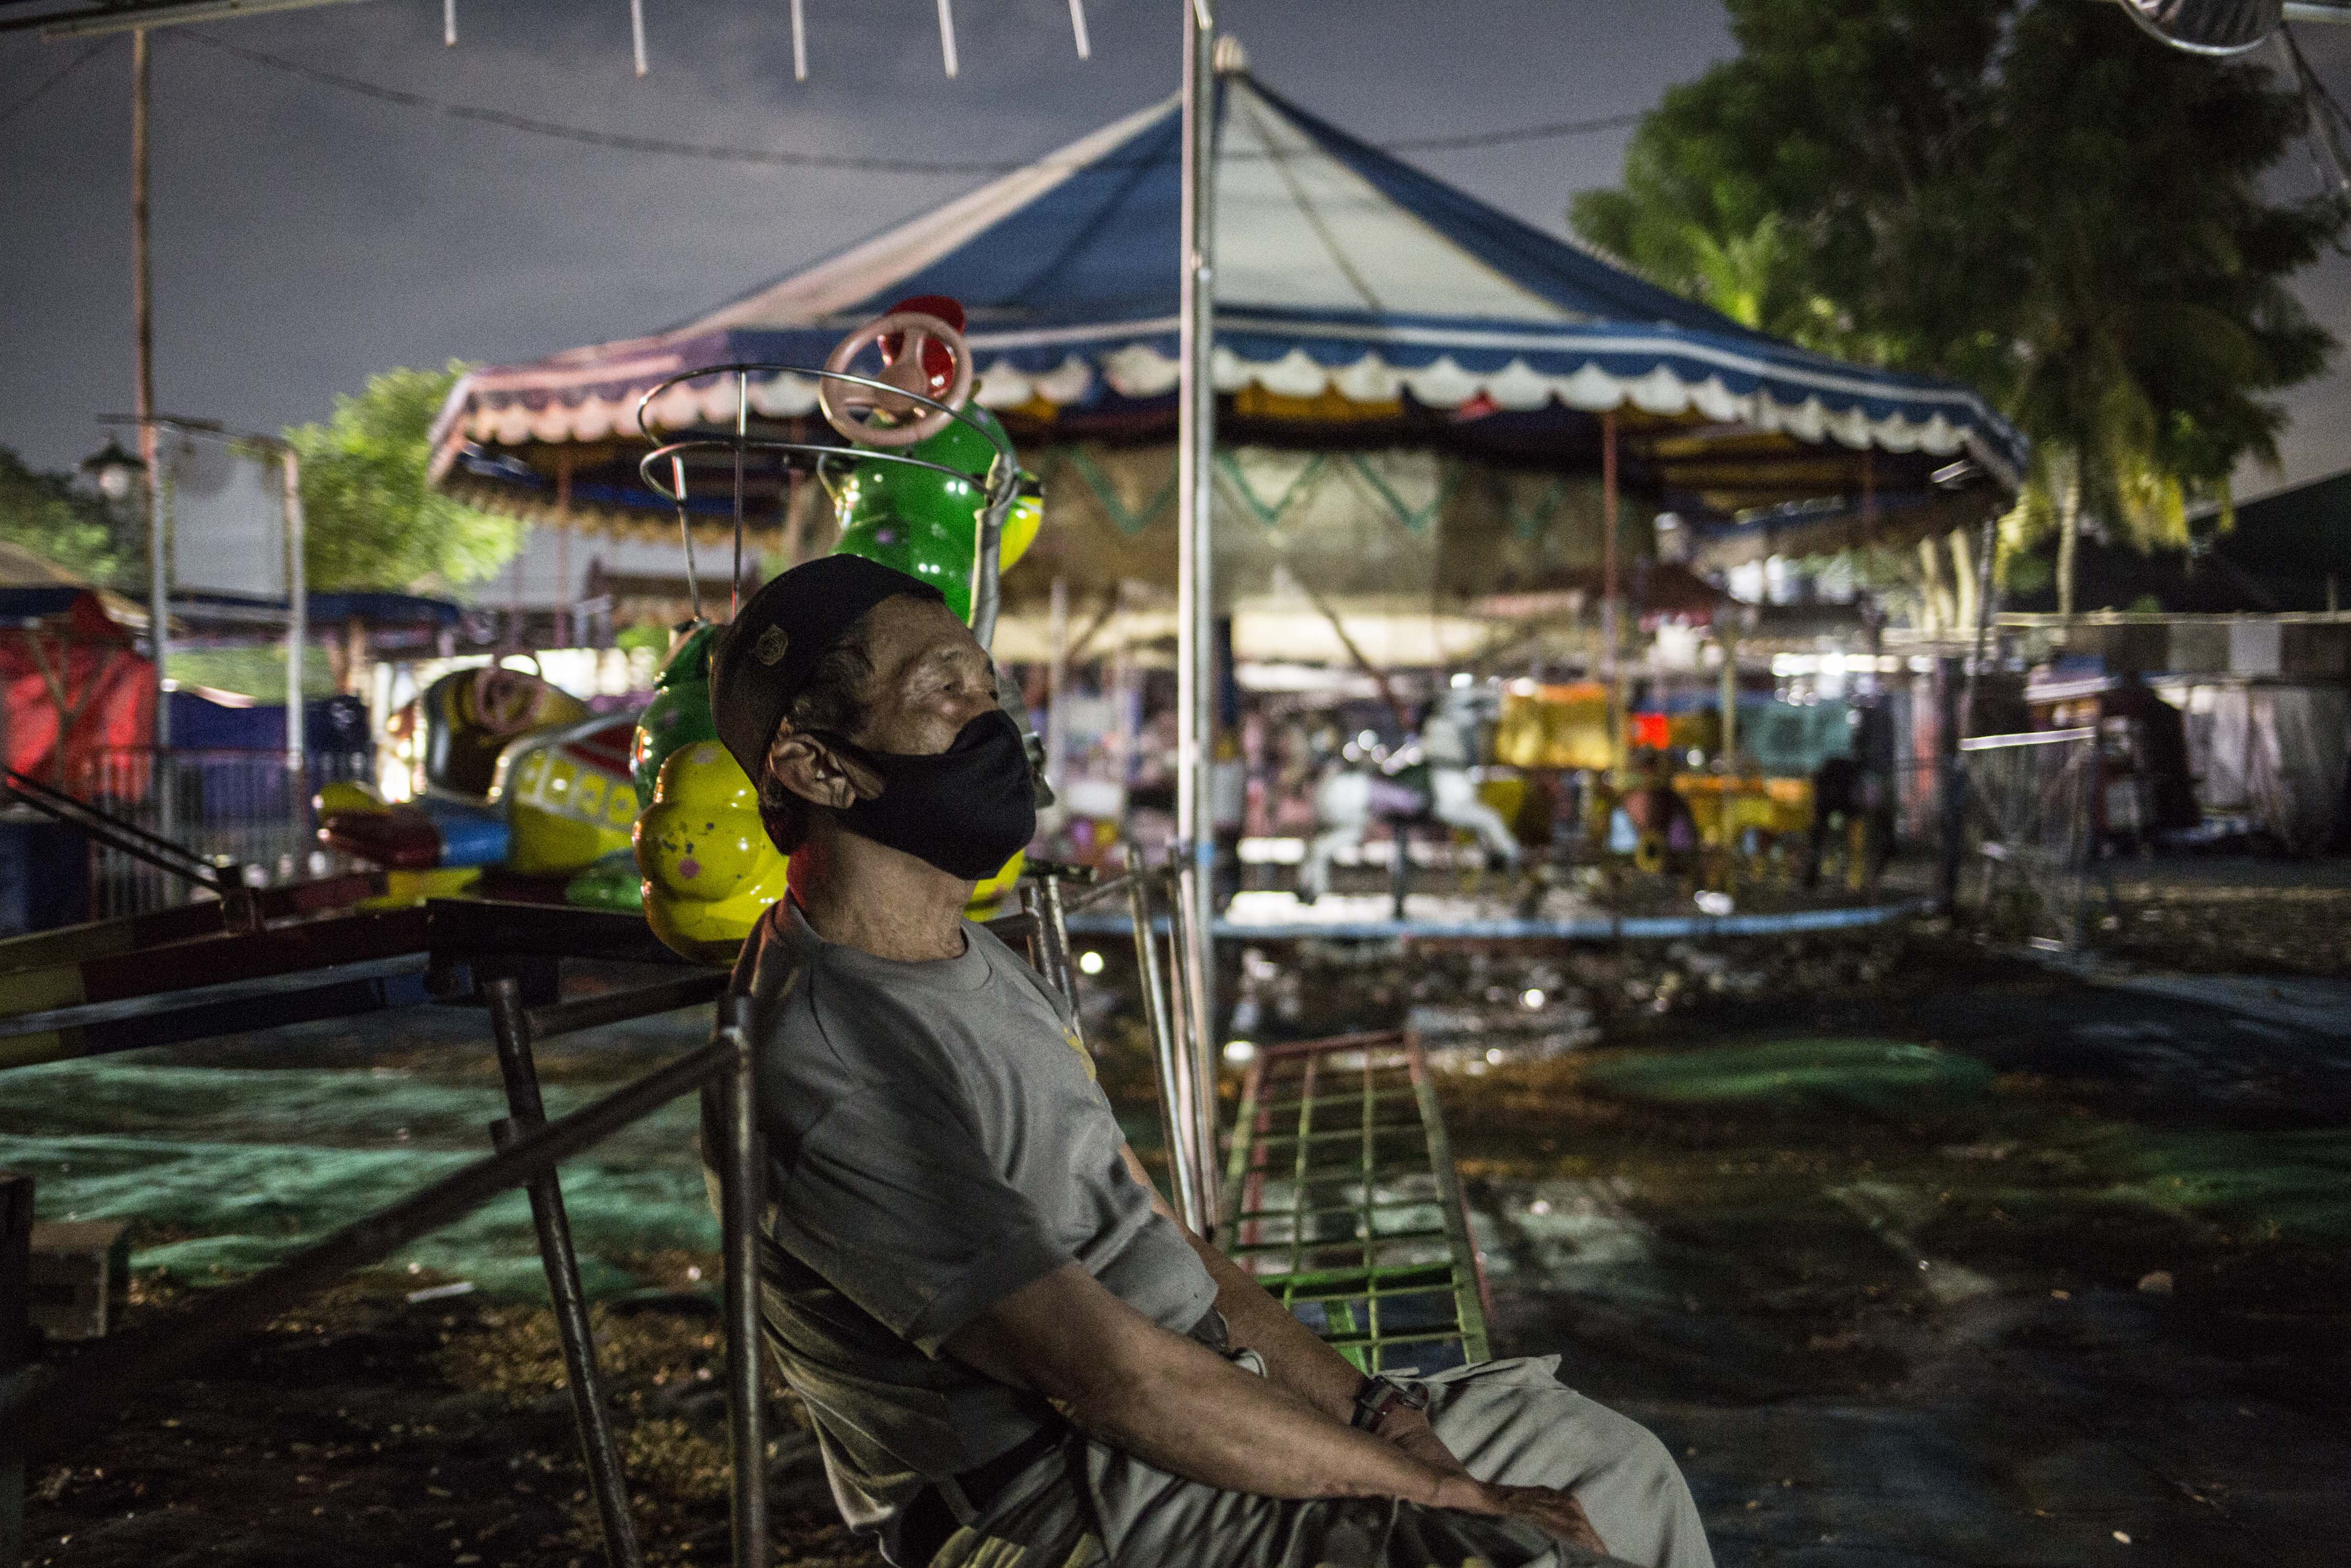 Pengelola Pasar Malam Duren Sawit, Jakarta Timur, Aji Mujiono (76) beristirahat di wahana permainan. Pasar malam tersebut terbengkalai sejak 20 Maret 2020 akibat merebaknya virus Covid-19 dan diberlakukannya Pembatasan Sosial Bersekala Besar (PSBB).